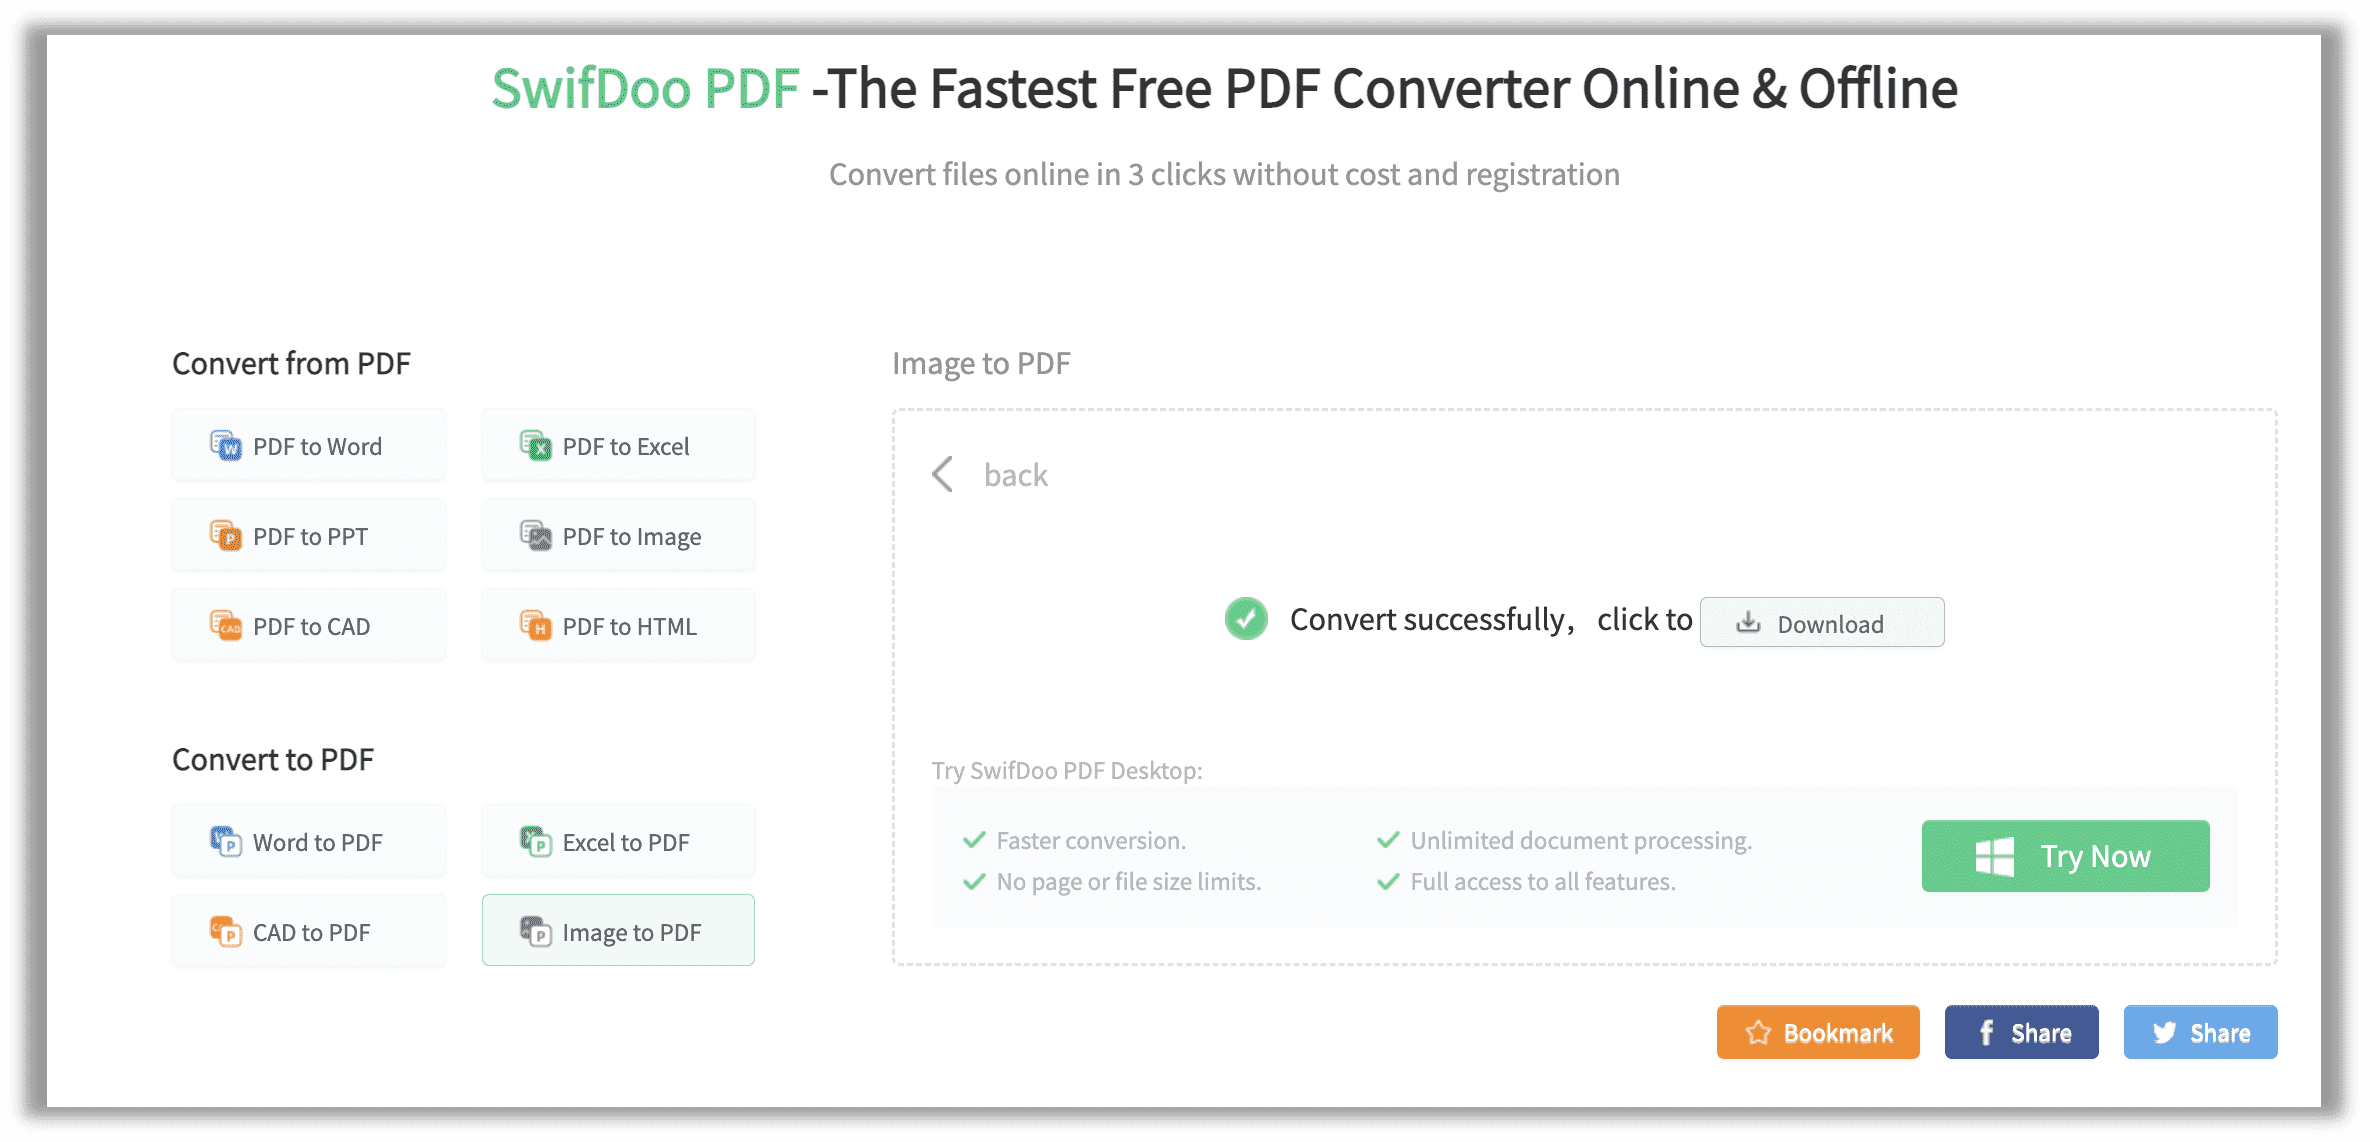 How to convert JPG to PDF in SwifDoo PDF online converter